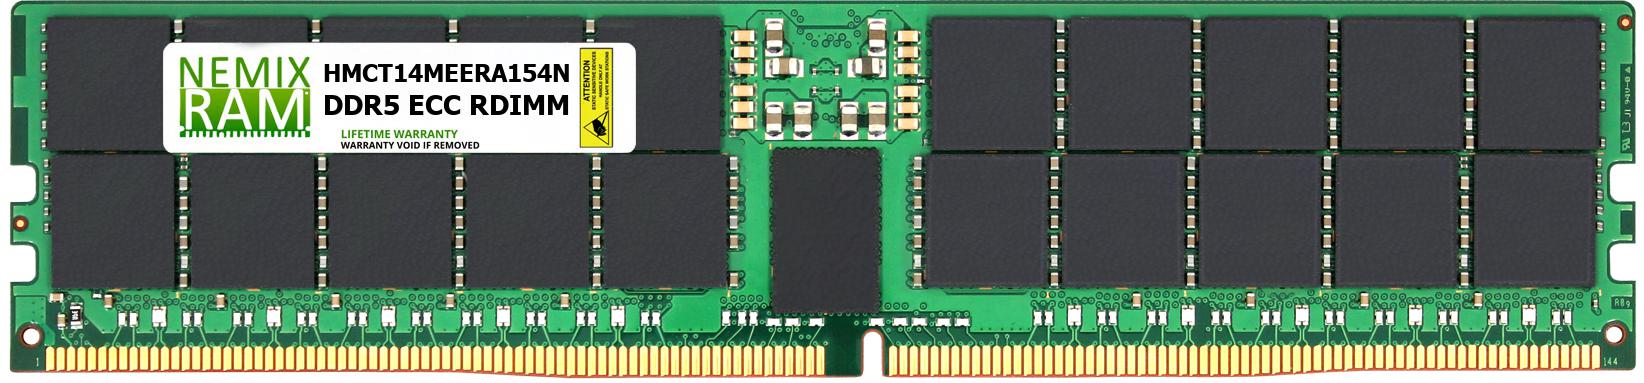 NEMIX RAM 256GB DDR5 4800MHz PC5-38400 ECC RDIMM Compatible with Hynix HMCT14MEERA154N